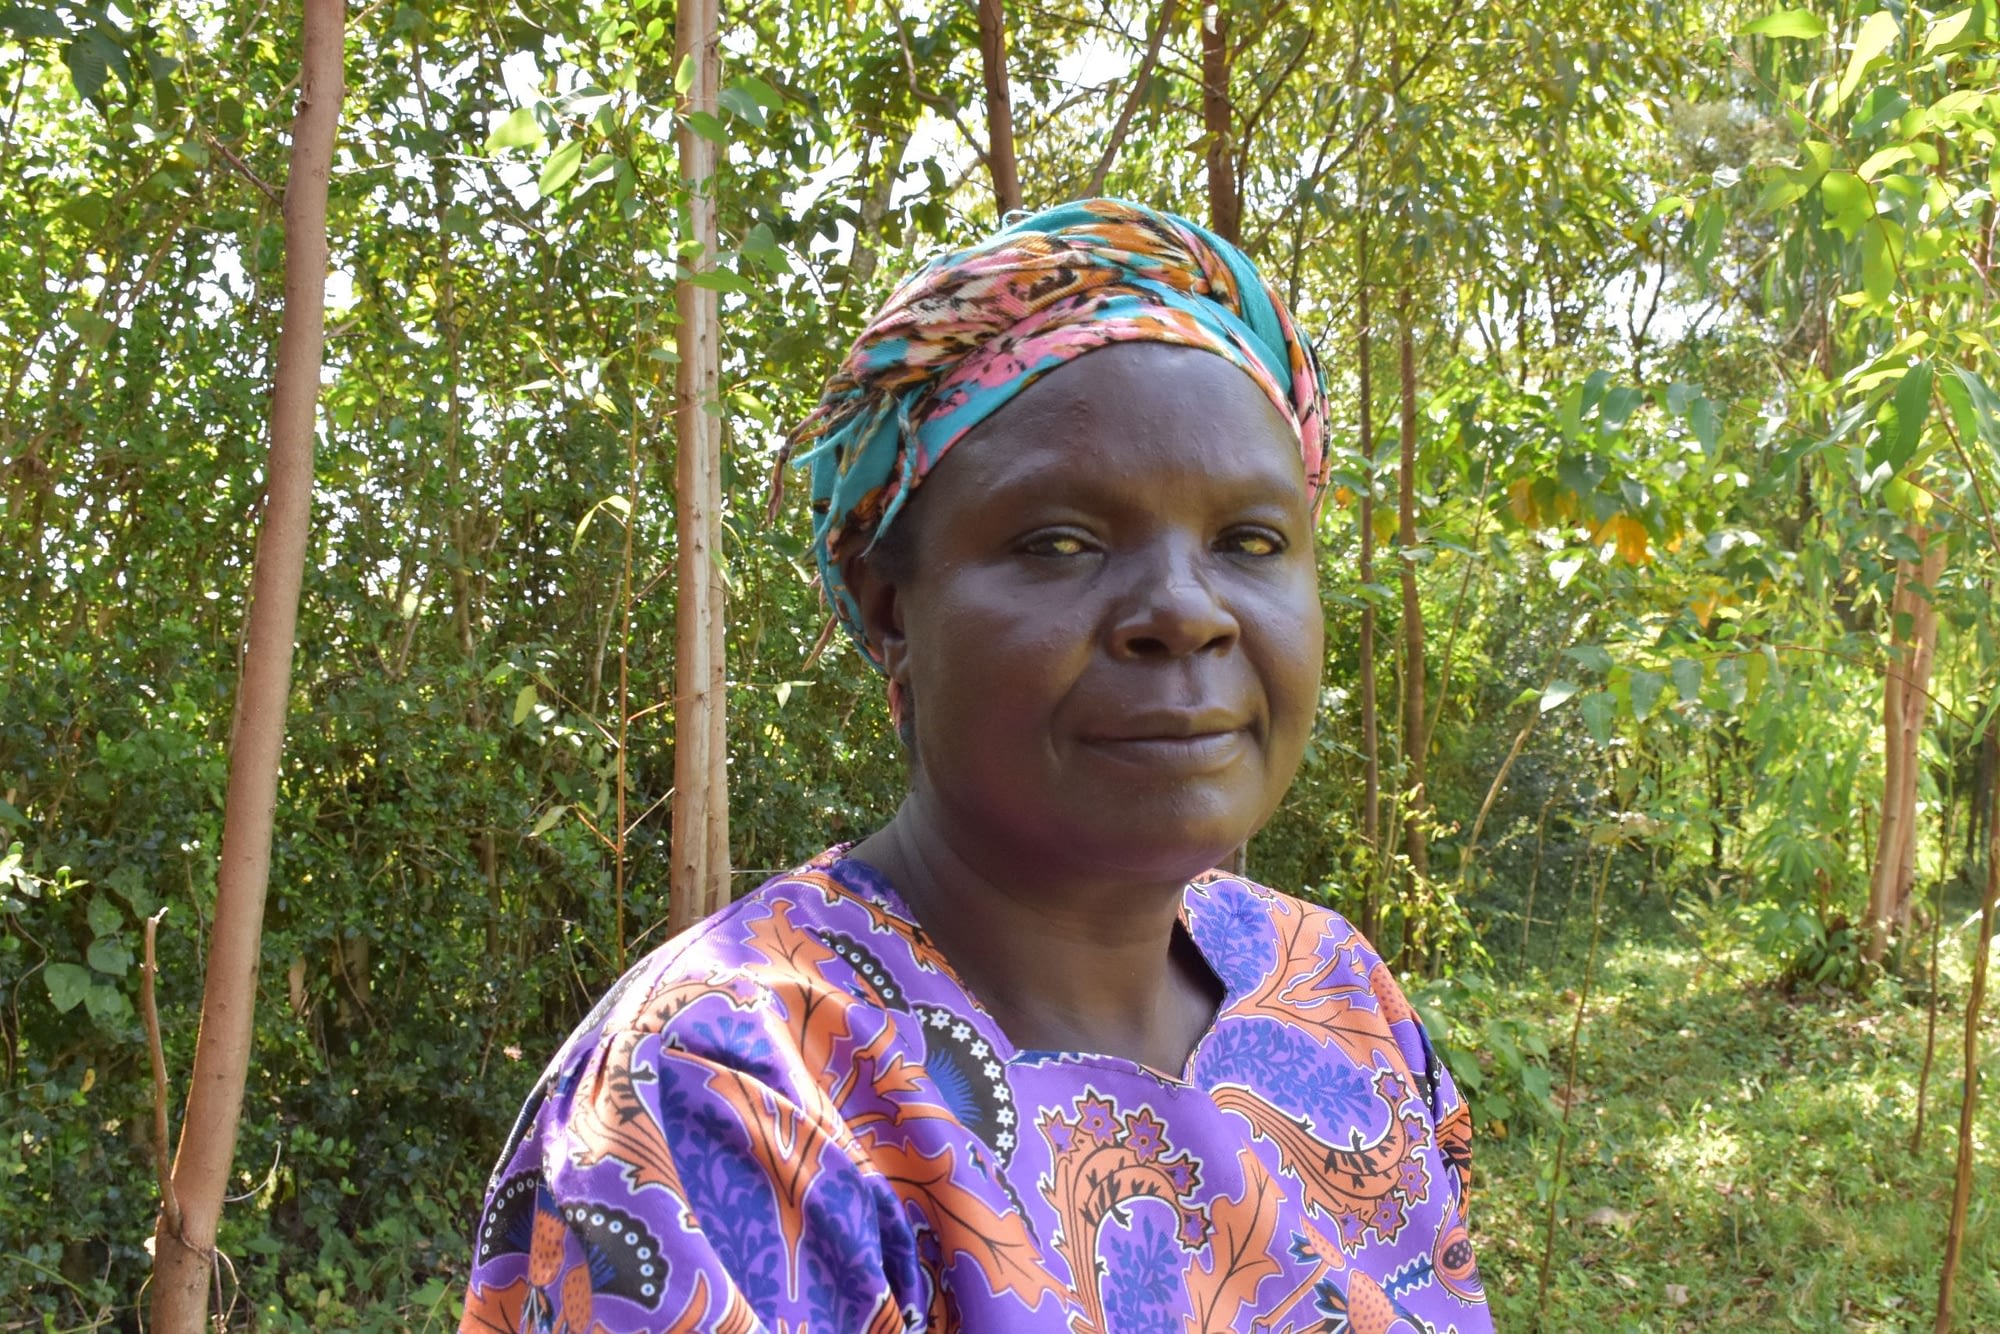 Sofa Eshiali, a 60-year-old maize farmer from Ikolomani, Western Kenya, who participated in the study. (Photo: Susan Umazi Otieno/CIMMYT)